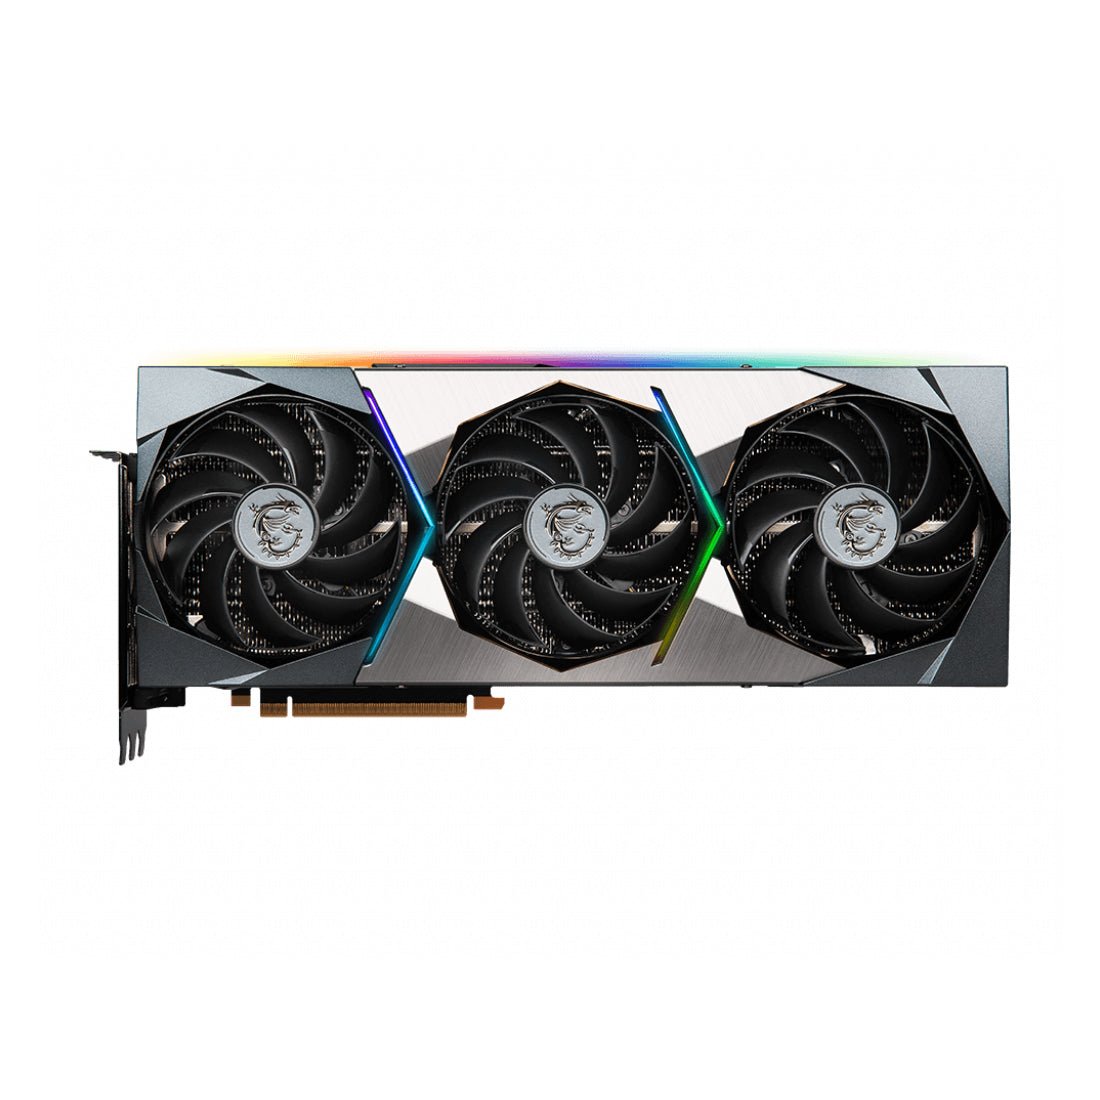 MSI GeForce RTX 3090Ti SUPRIM 24G Graphics Card - Store 974 | ستور ٩٧٤